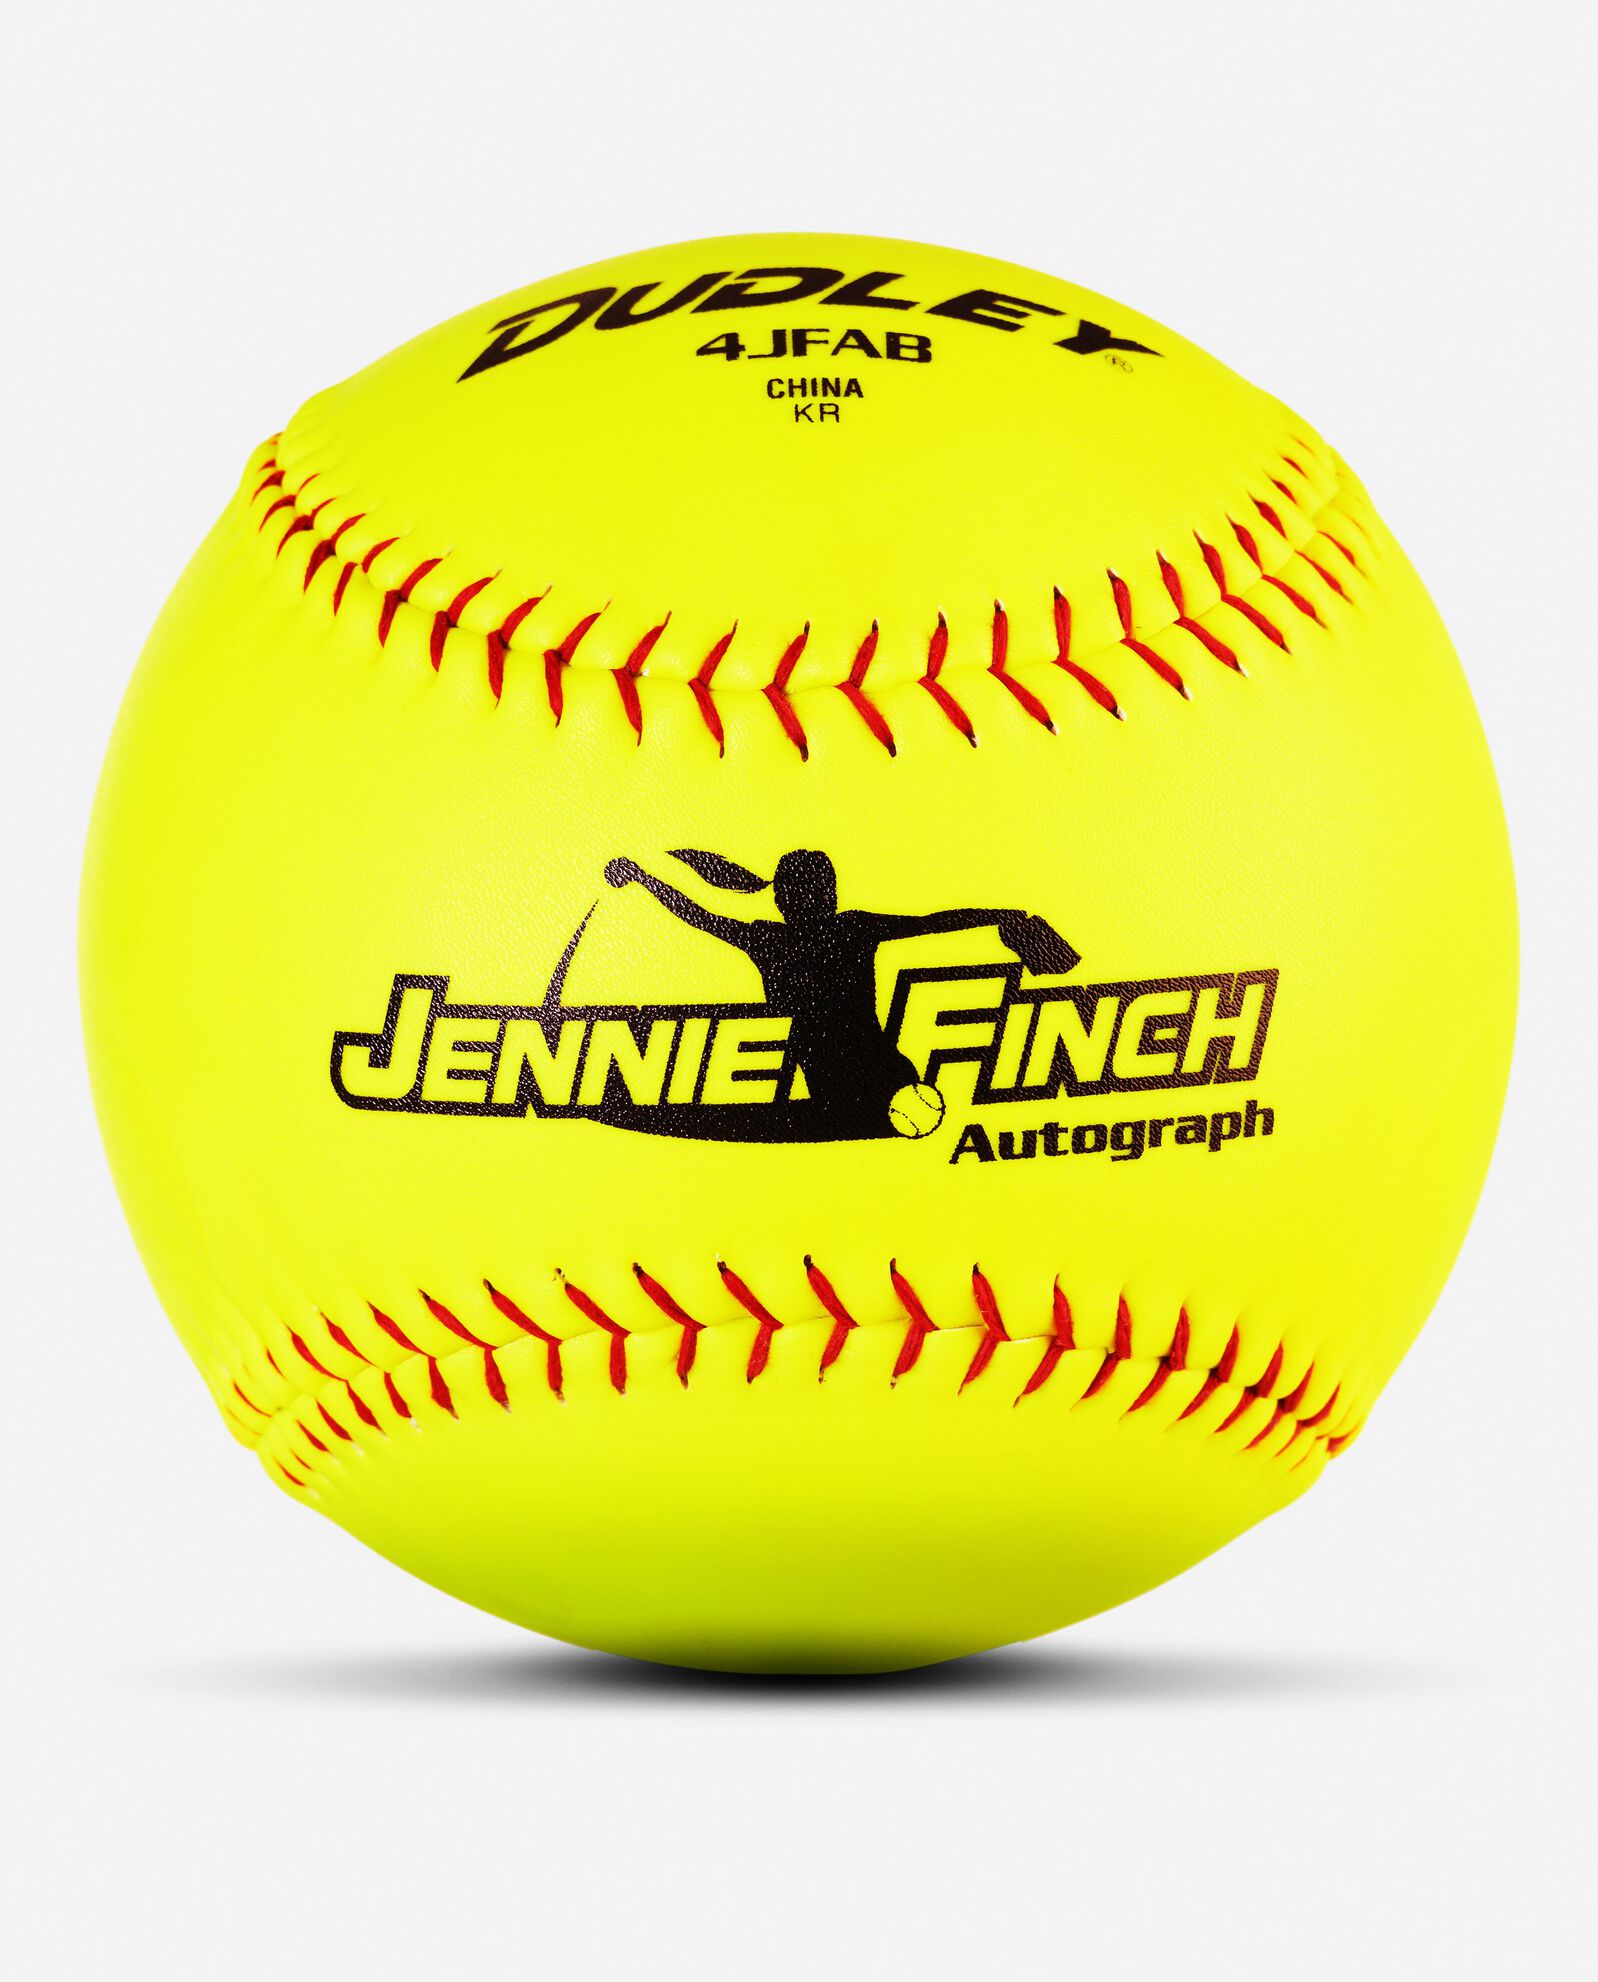 Jennie Finch Autograph Ball 